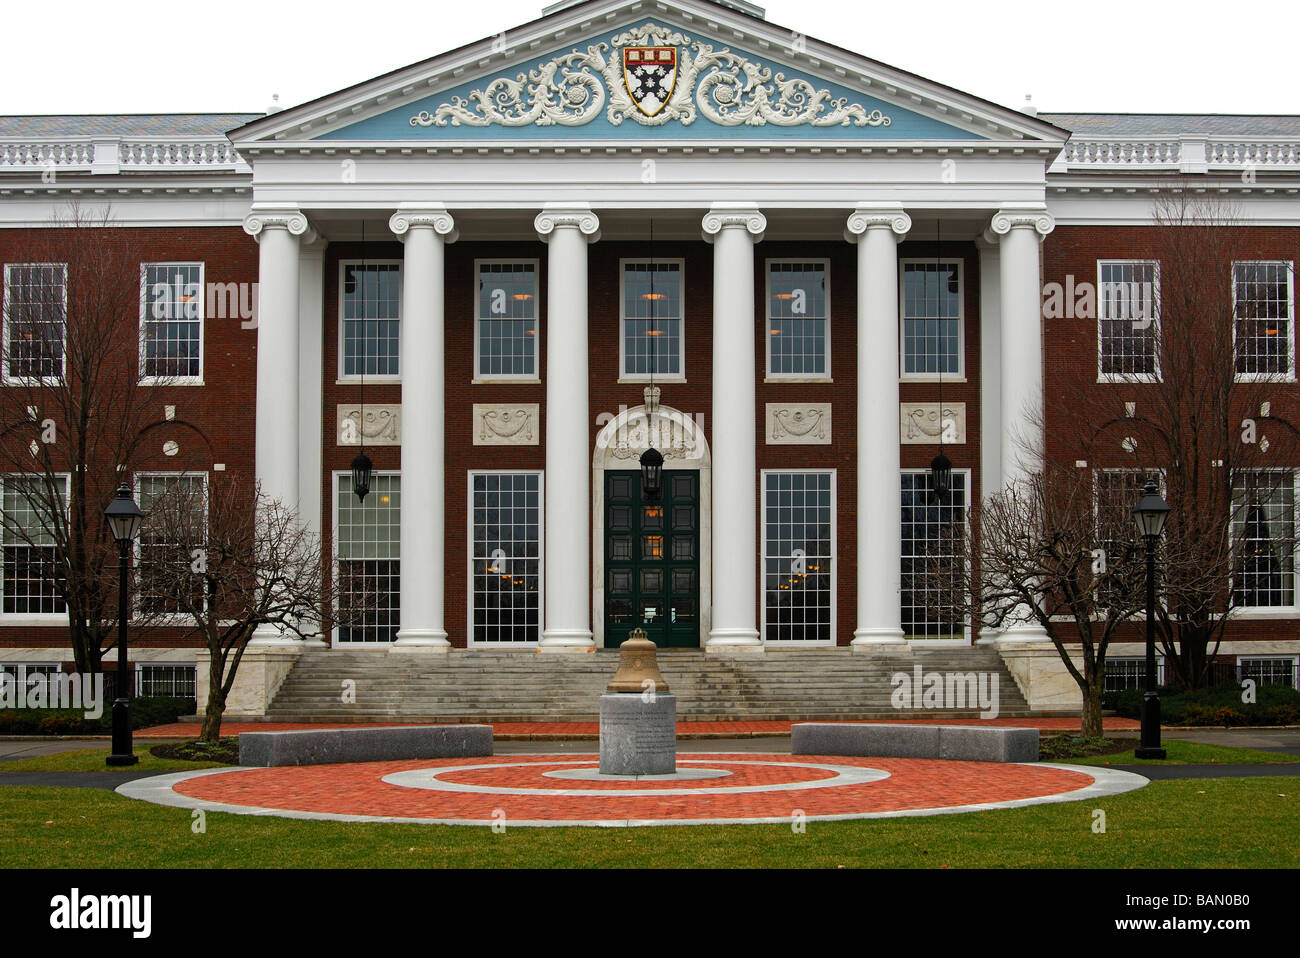 Harvard Business School Campus Map